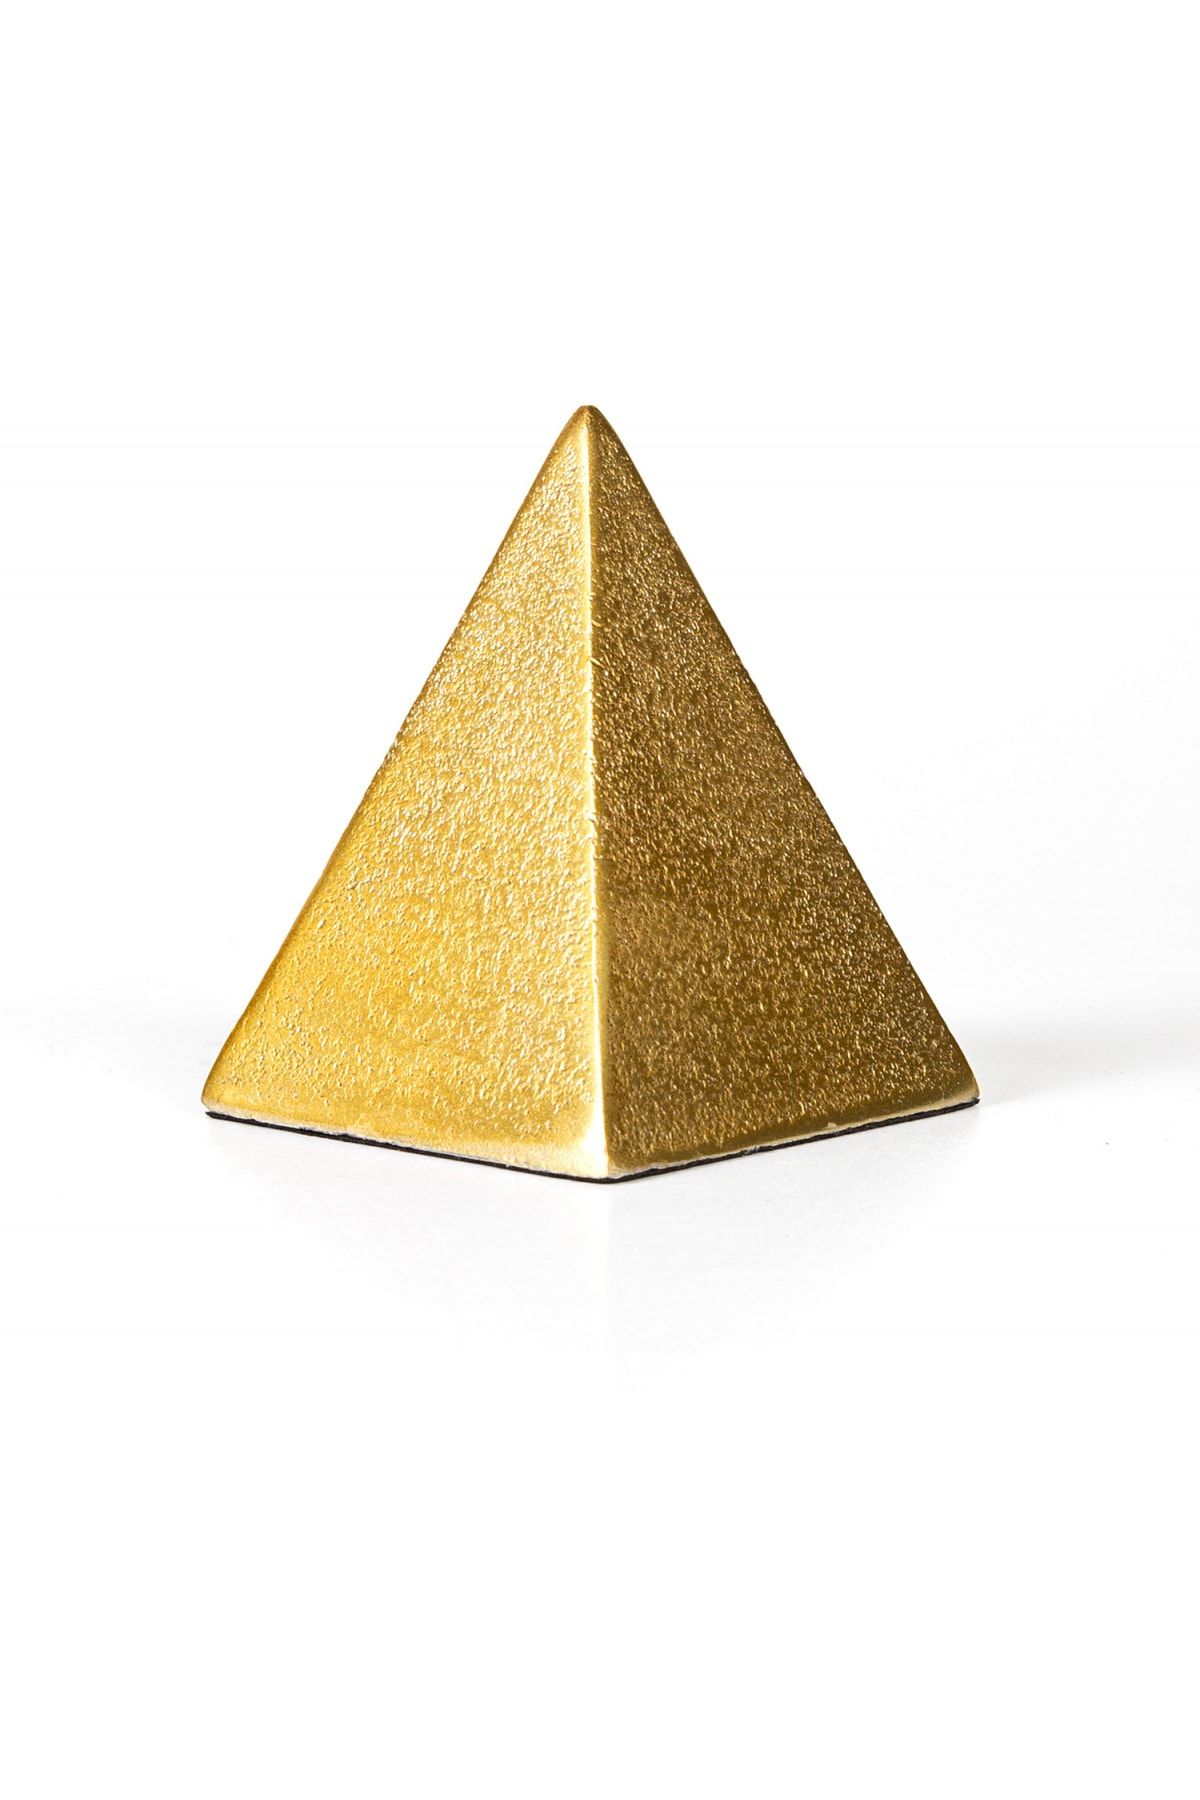 Herdekora Dekoratif Metal Piramit Gold 8x9.5x8 Cm.